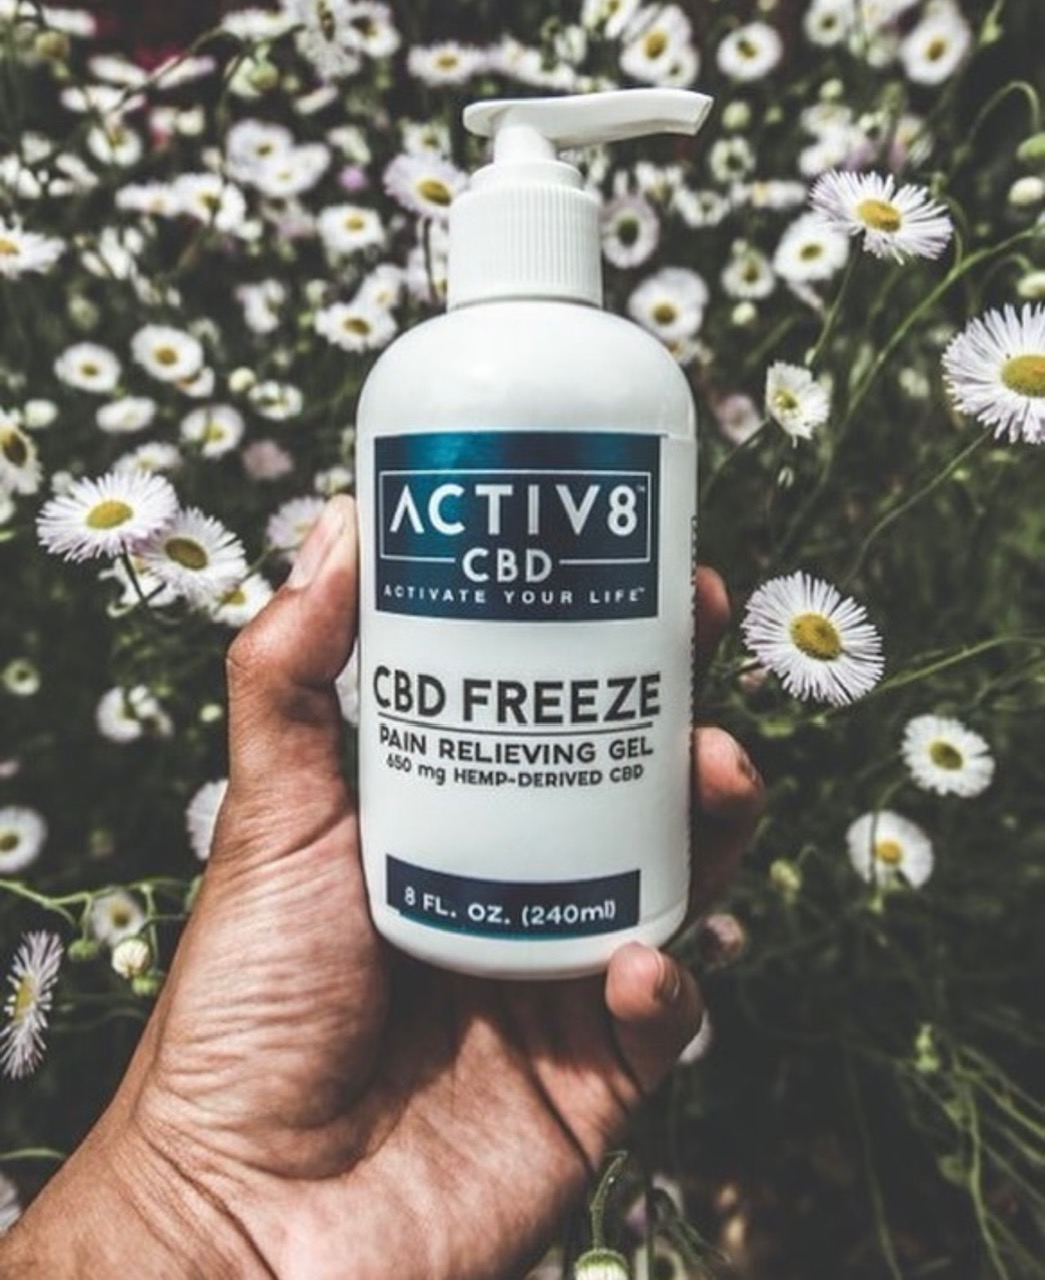 CBD Freeze Pain Relieving Gel